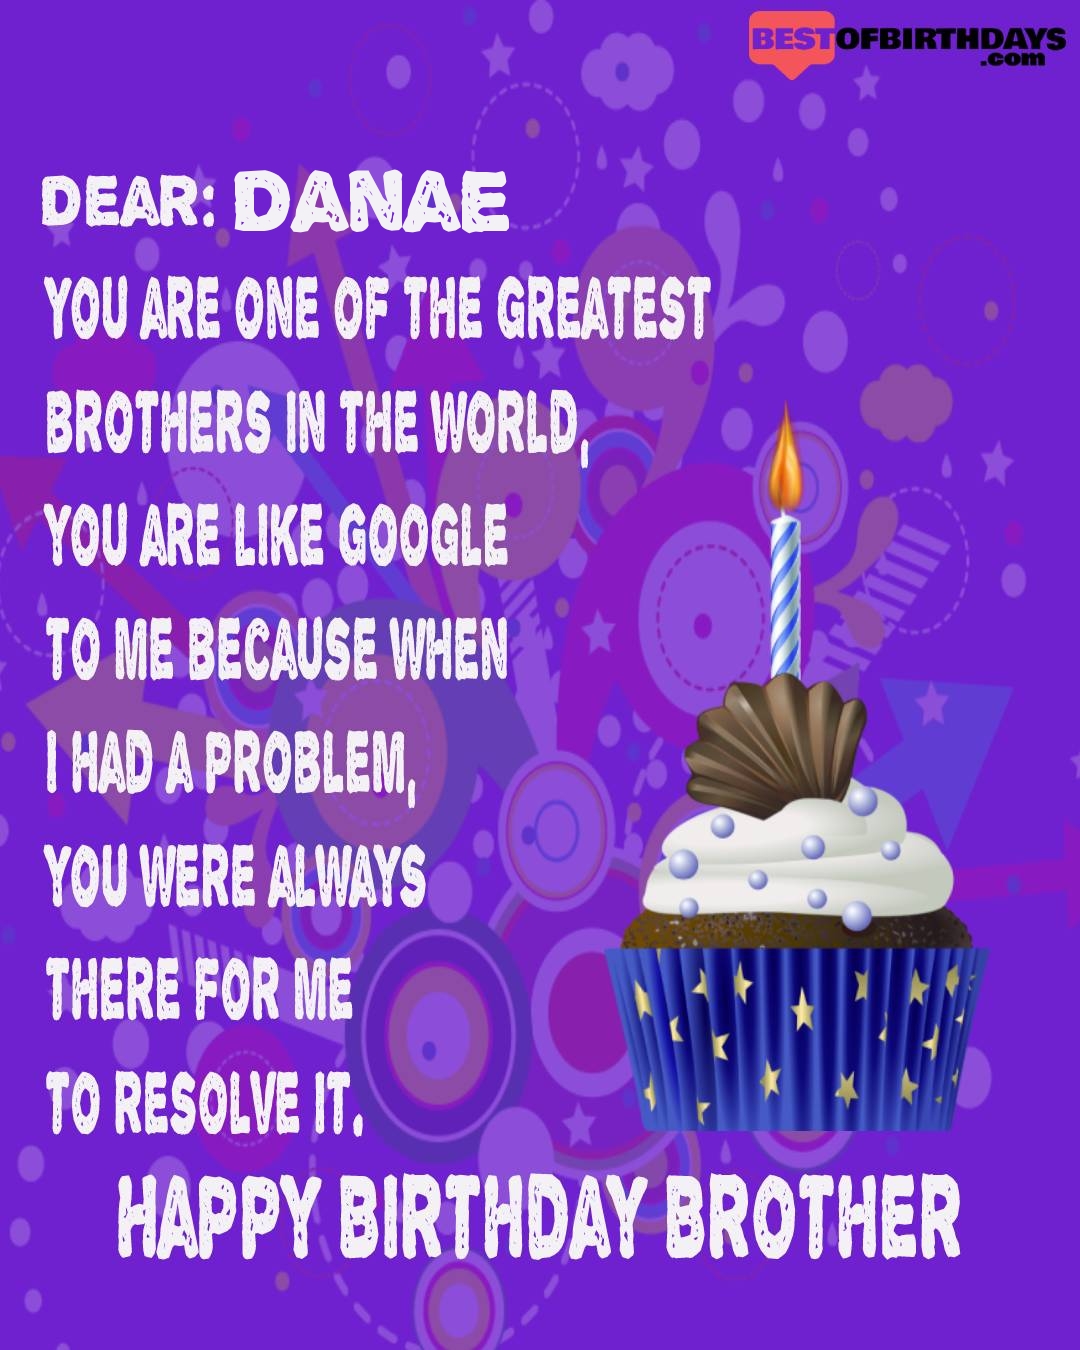 Happy birthday danae bhai brother bro